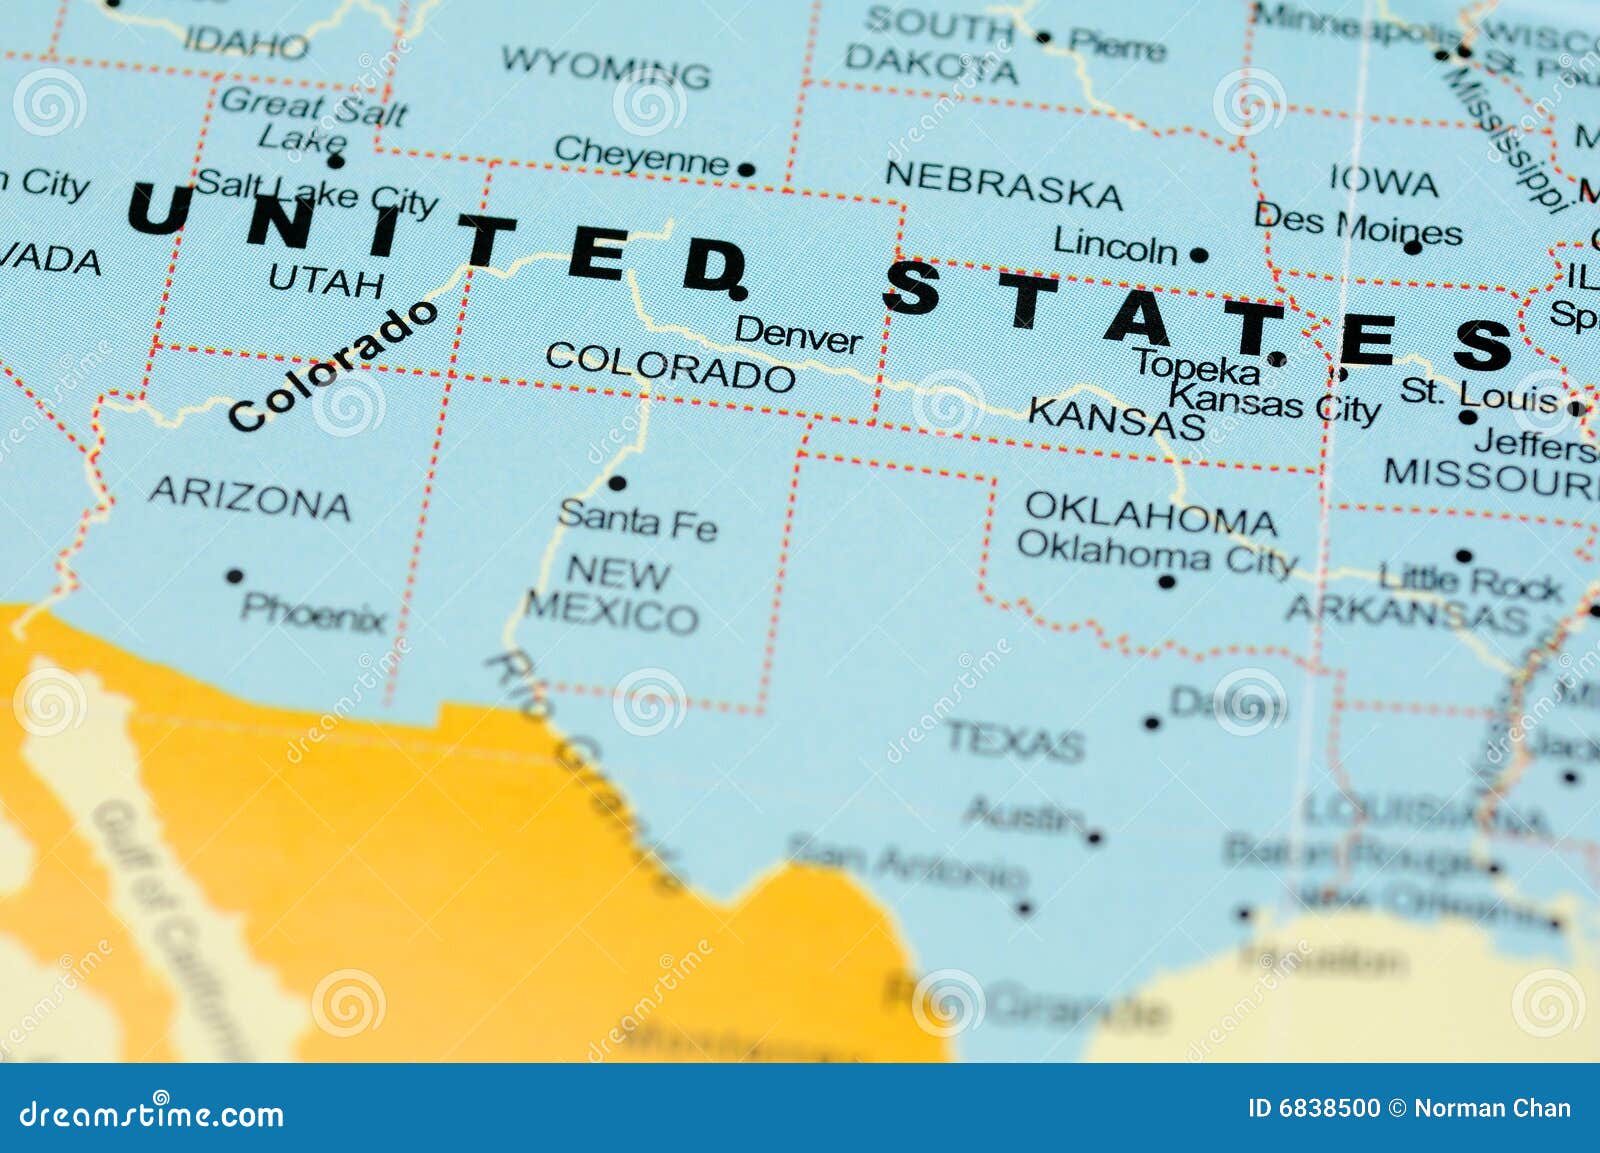 united states on map